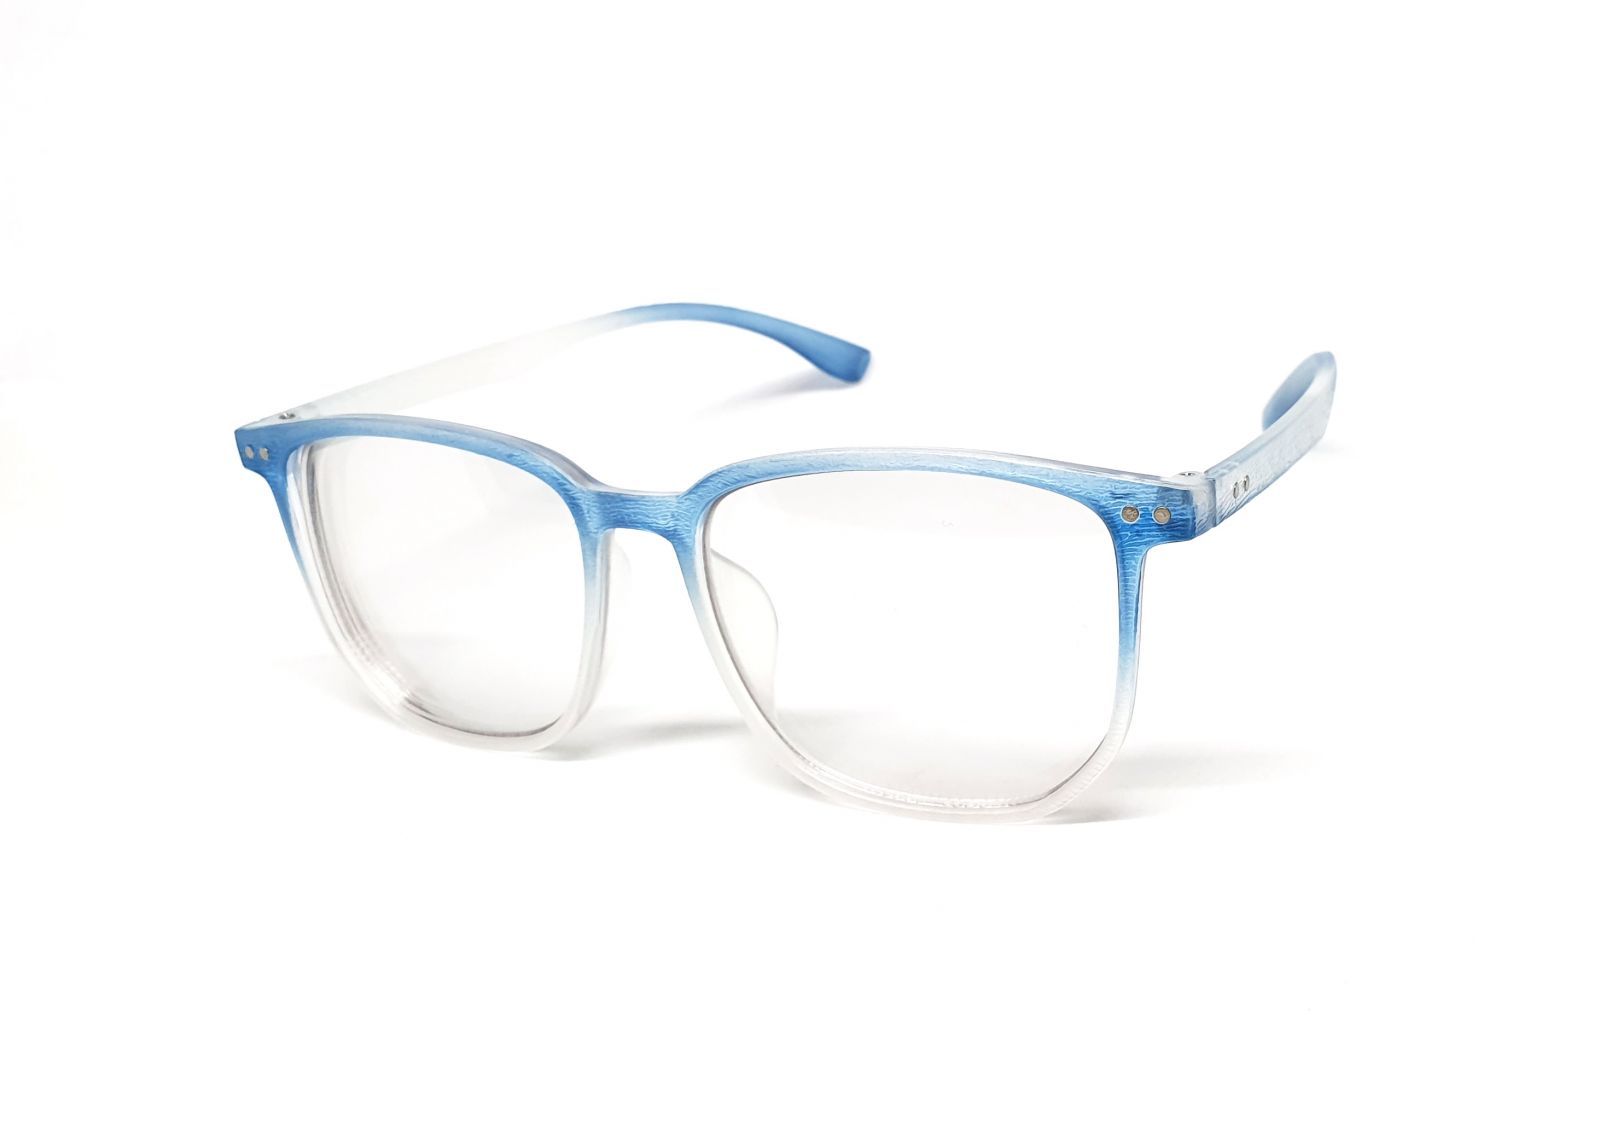 Samozabarvovací dioptrické brýle F23 / -1,50 blue transparent